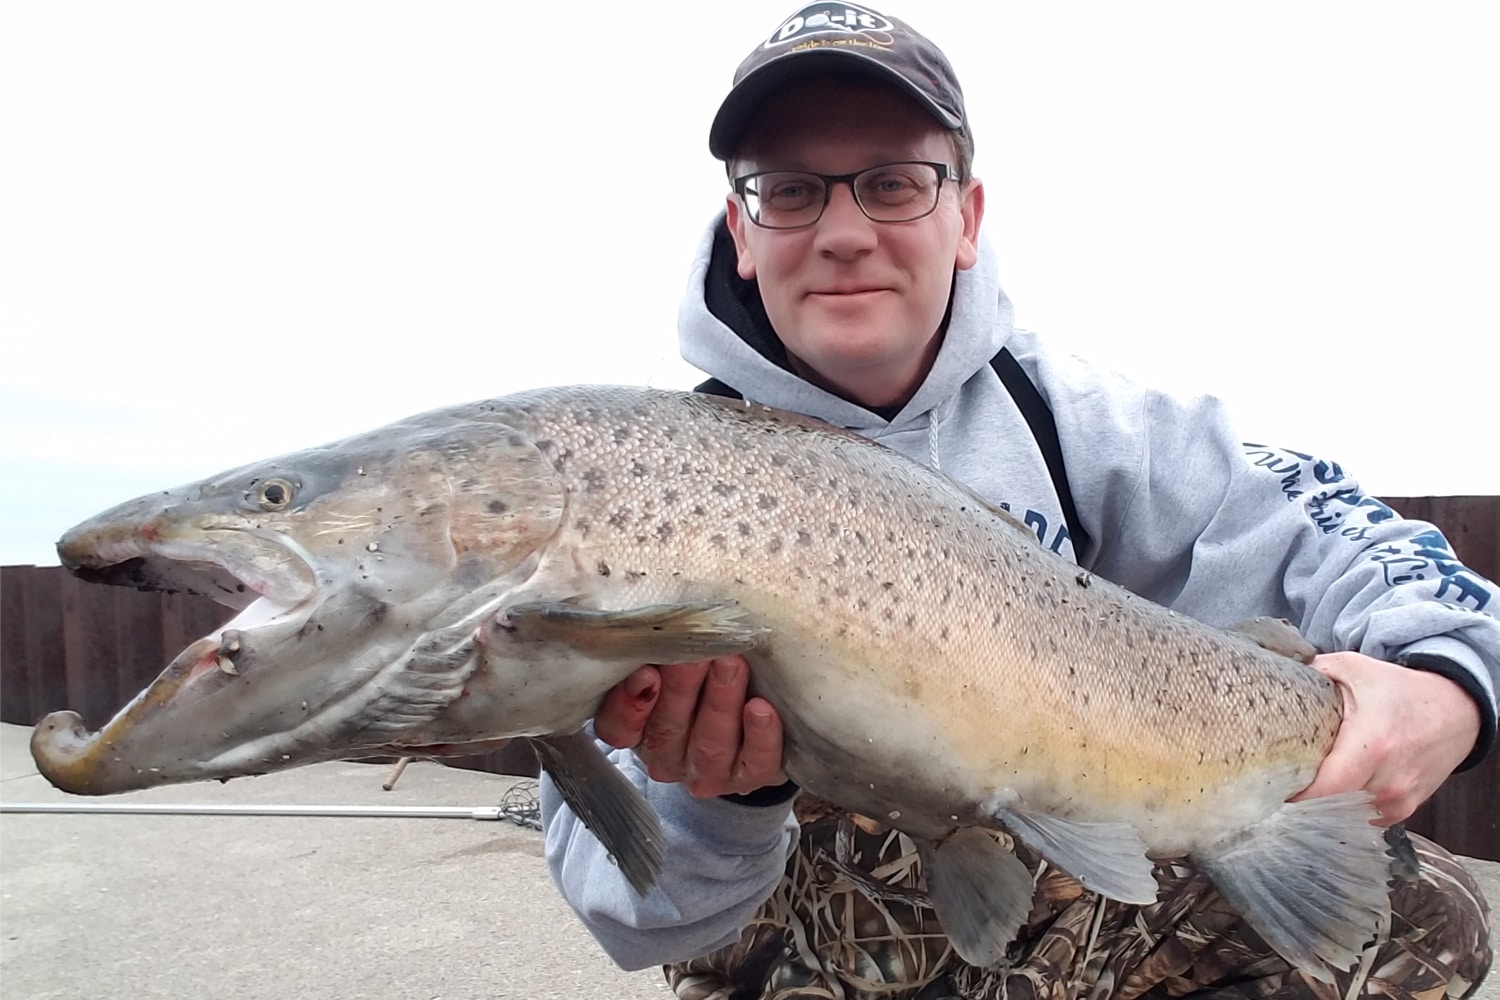 Mepp's Long Cast Spinner – Lake Michigan Angler A